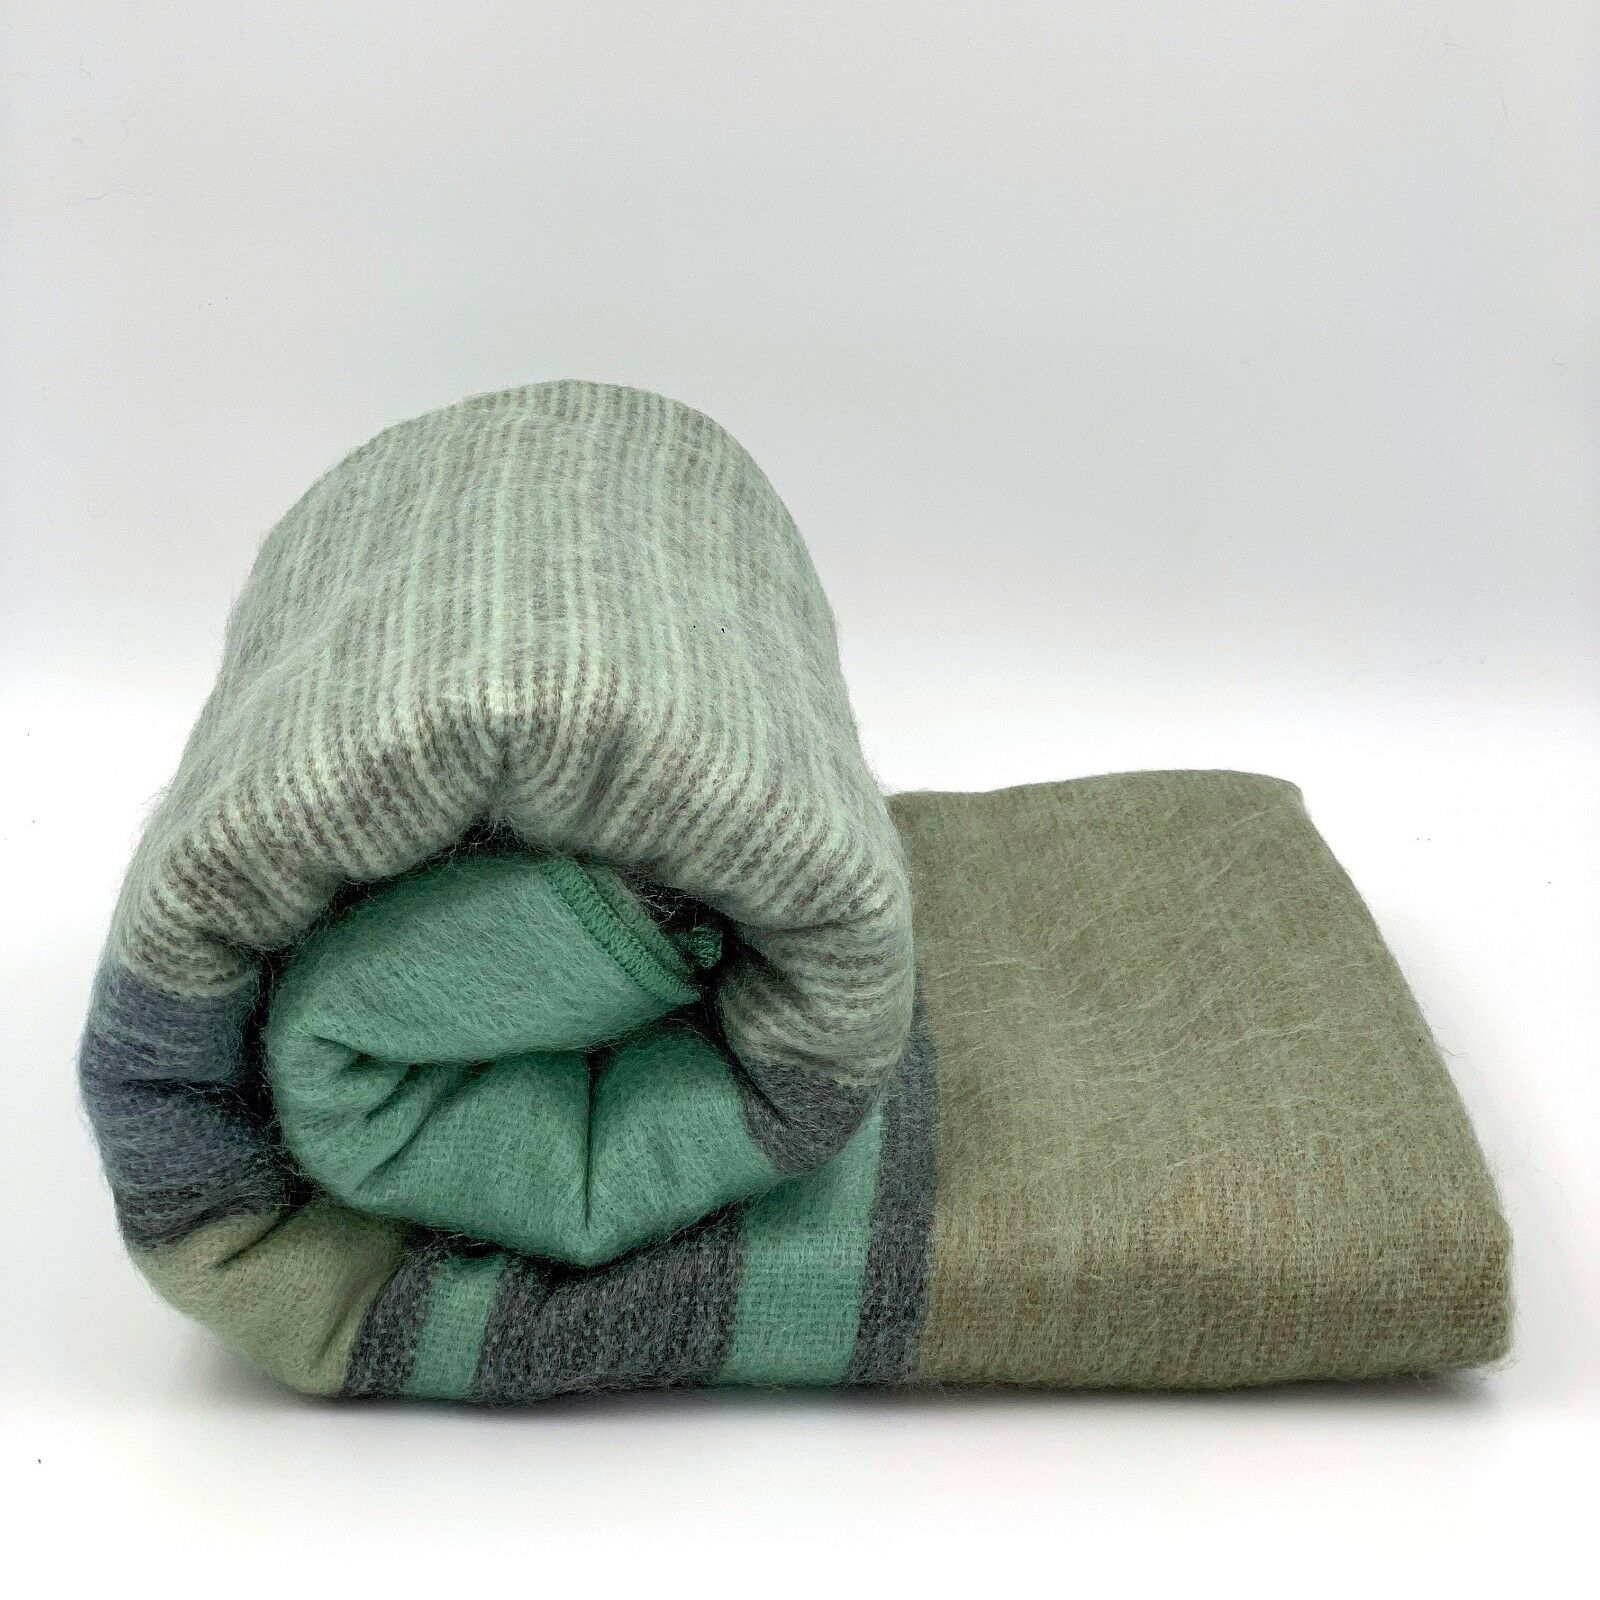 Saquisili - Baby Alpaca Wool Throw Blanket / Sofa Cover - Queen 98" x 65" - Striped Pattern Mixed Aqua/Green